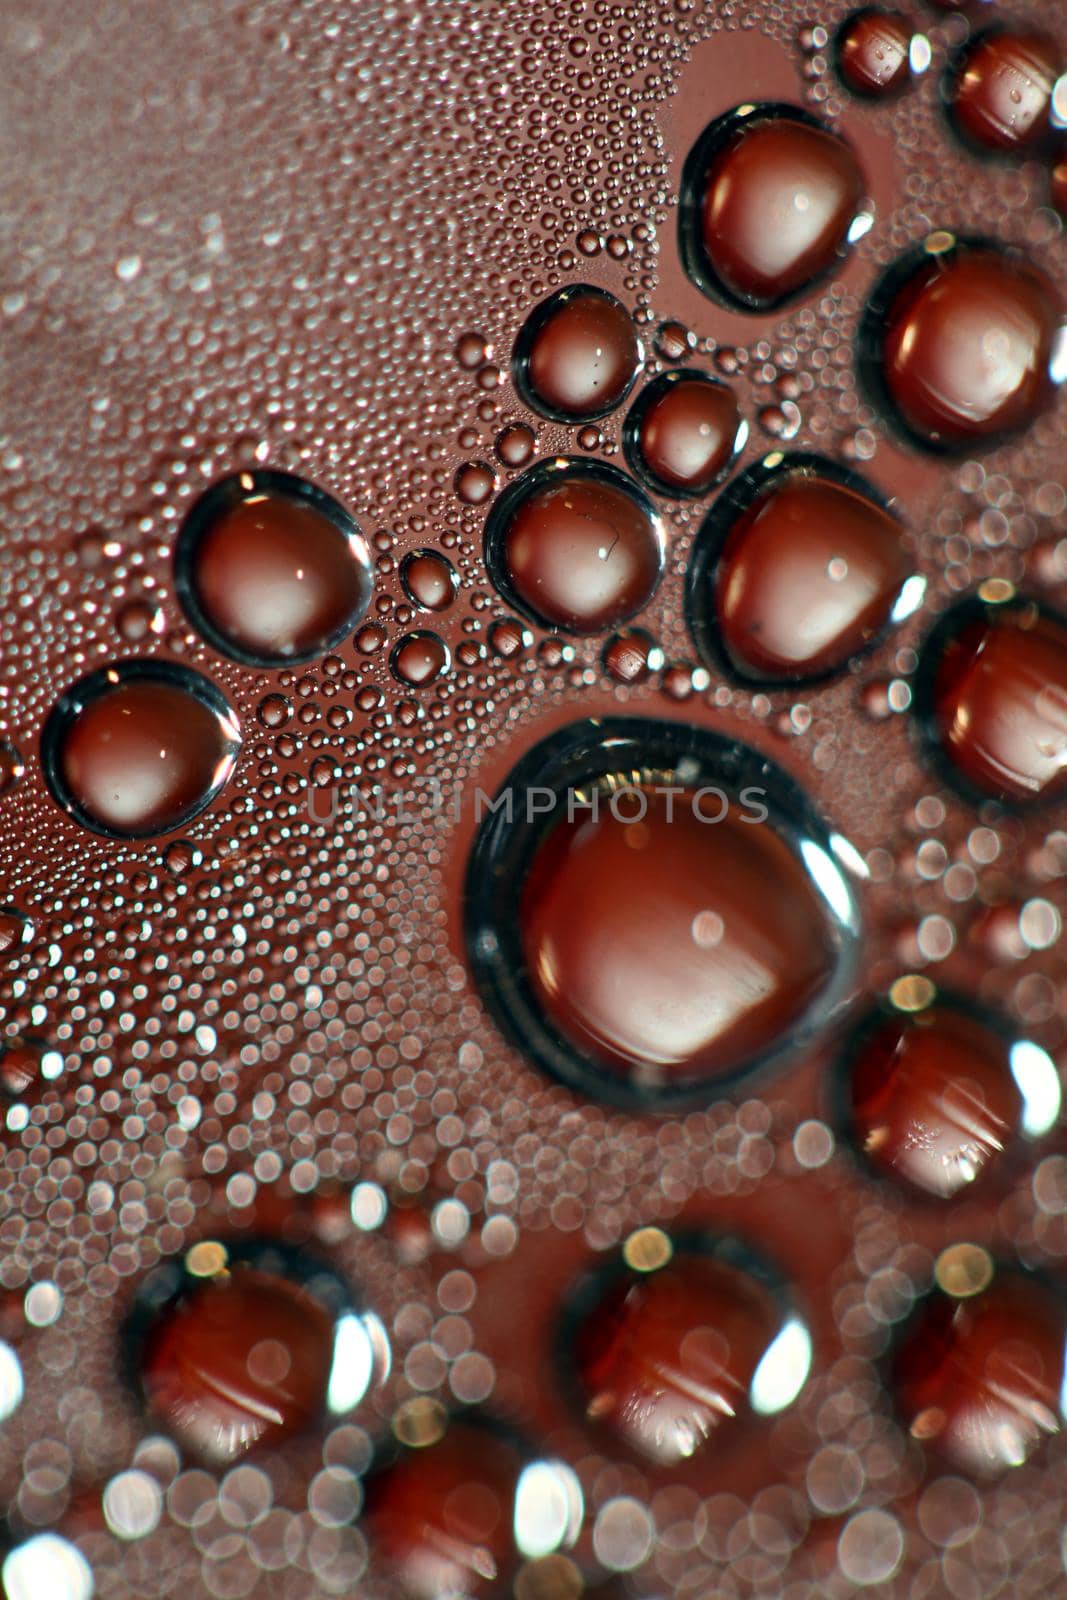 Water drops macro background modern high quality print